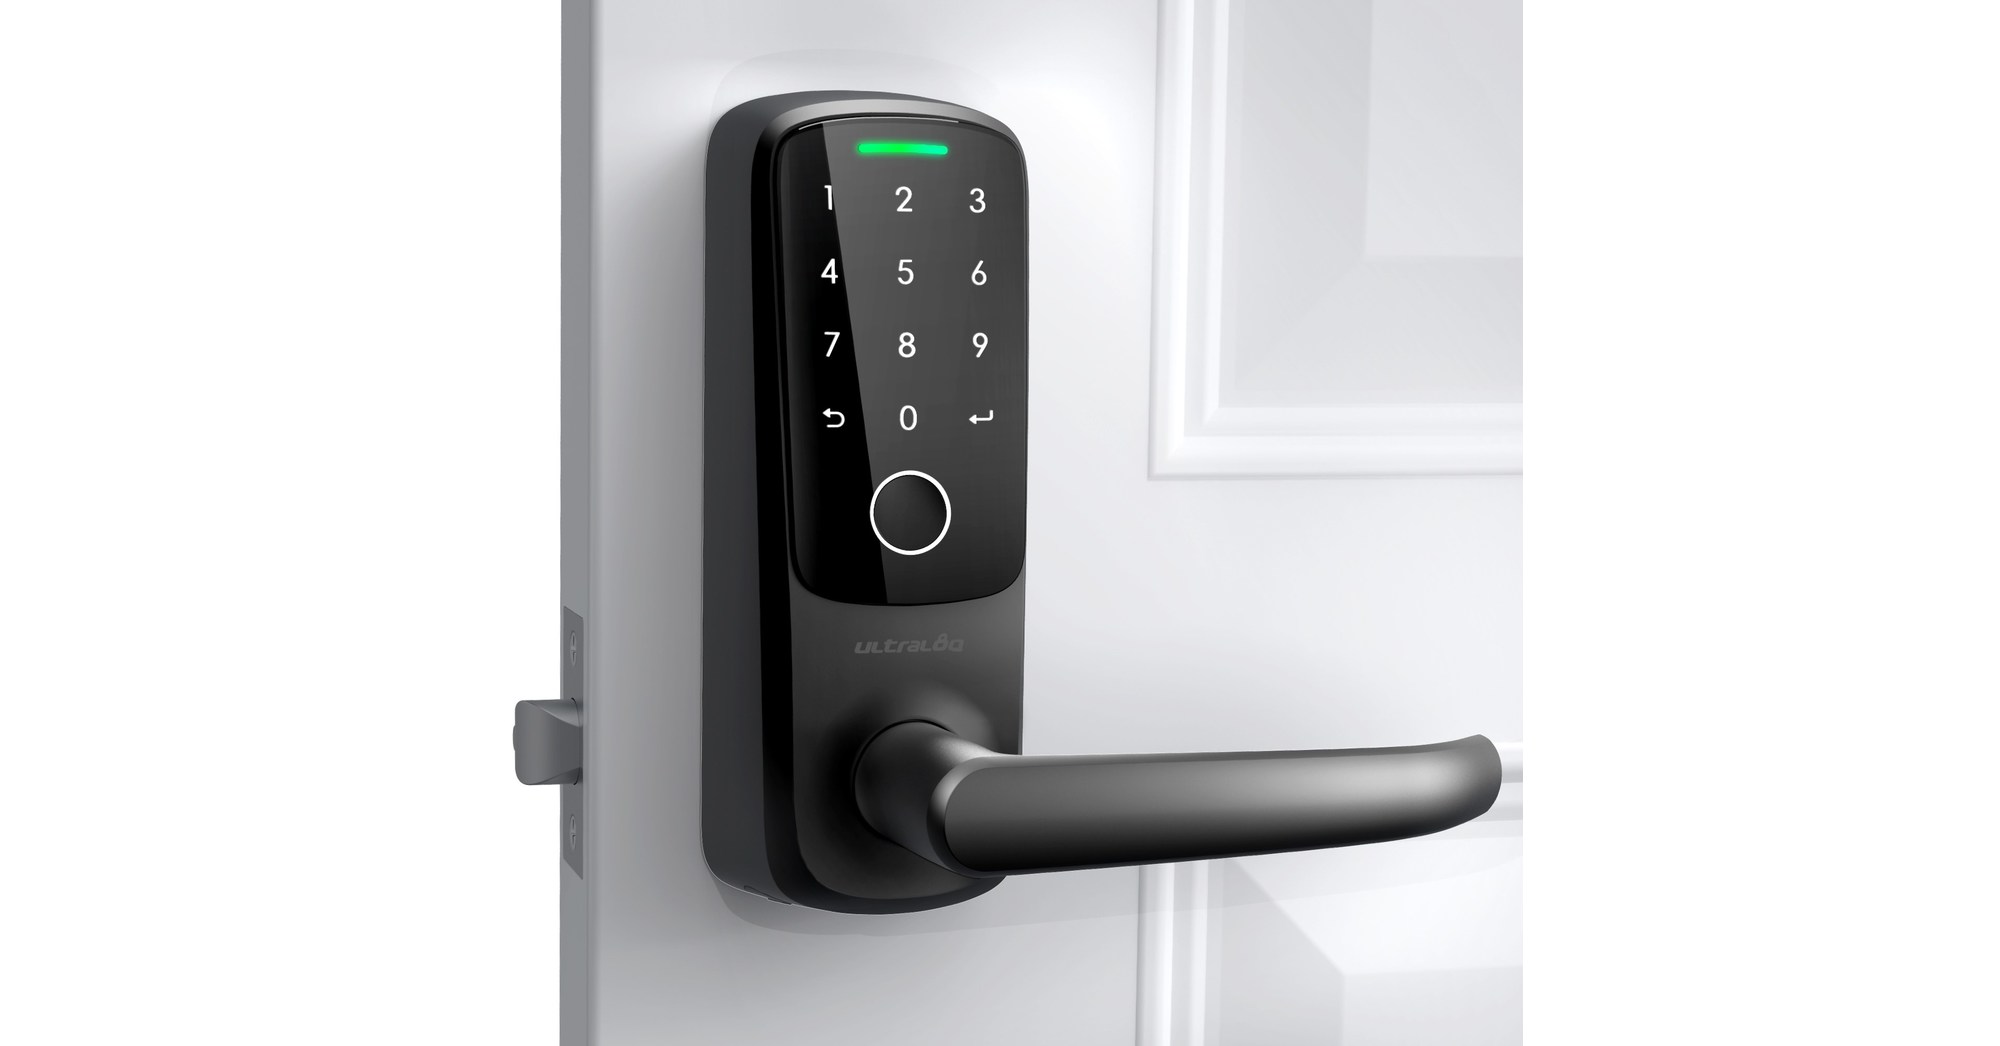 ULTRALOQ Lever, Heavy Duty Smart Lock 5-in-1 Keyless Entry Door Locks,  Fingerprint Lock with Keypads and Voice Guide, Smart Door Lock for Front  Door, Home and Office Black 